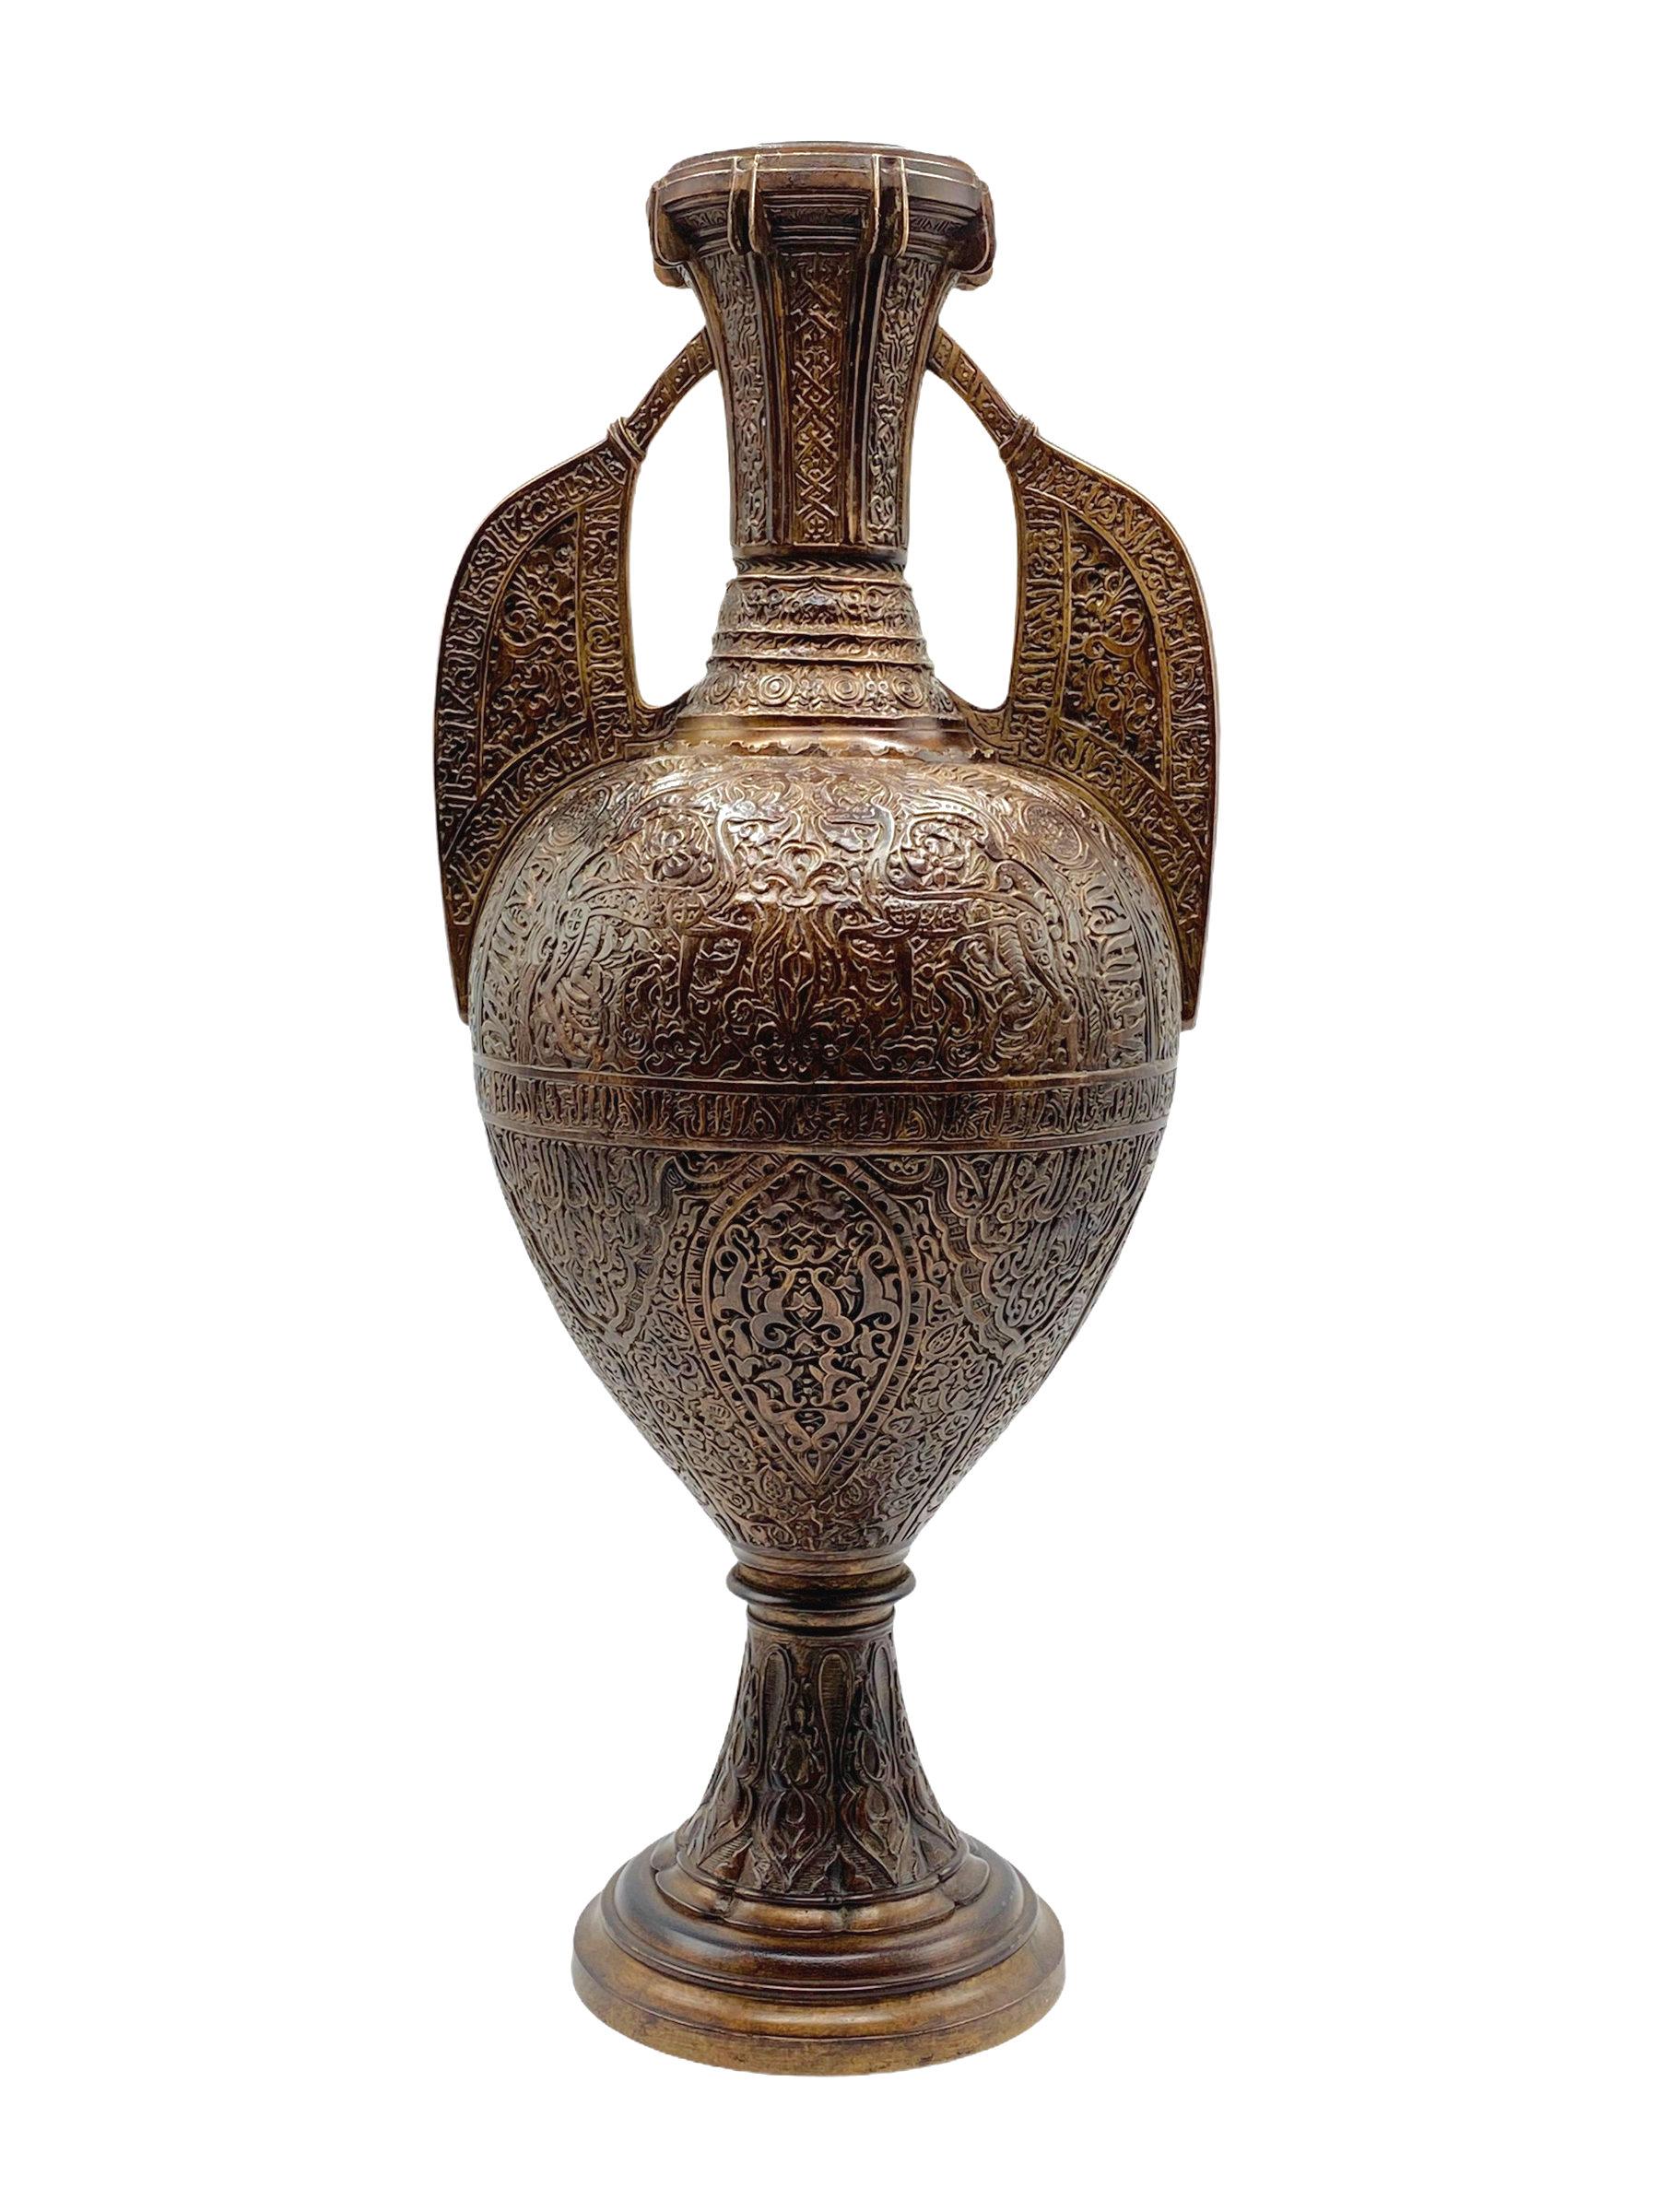 Finest quality cast French 19 century patinated bronze Alhambra Islamic vase.